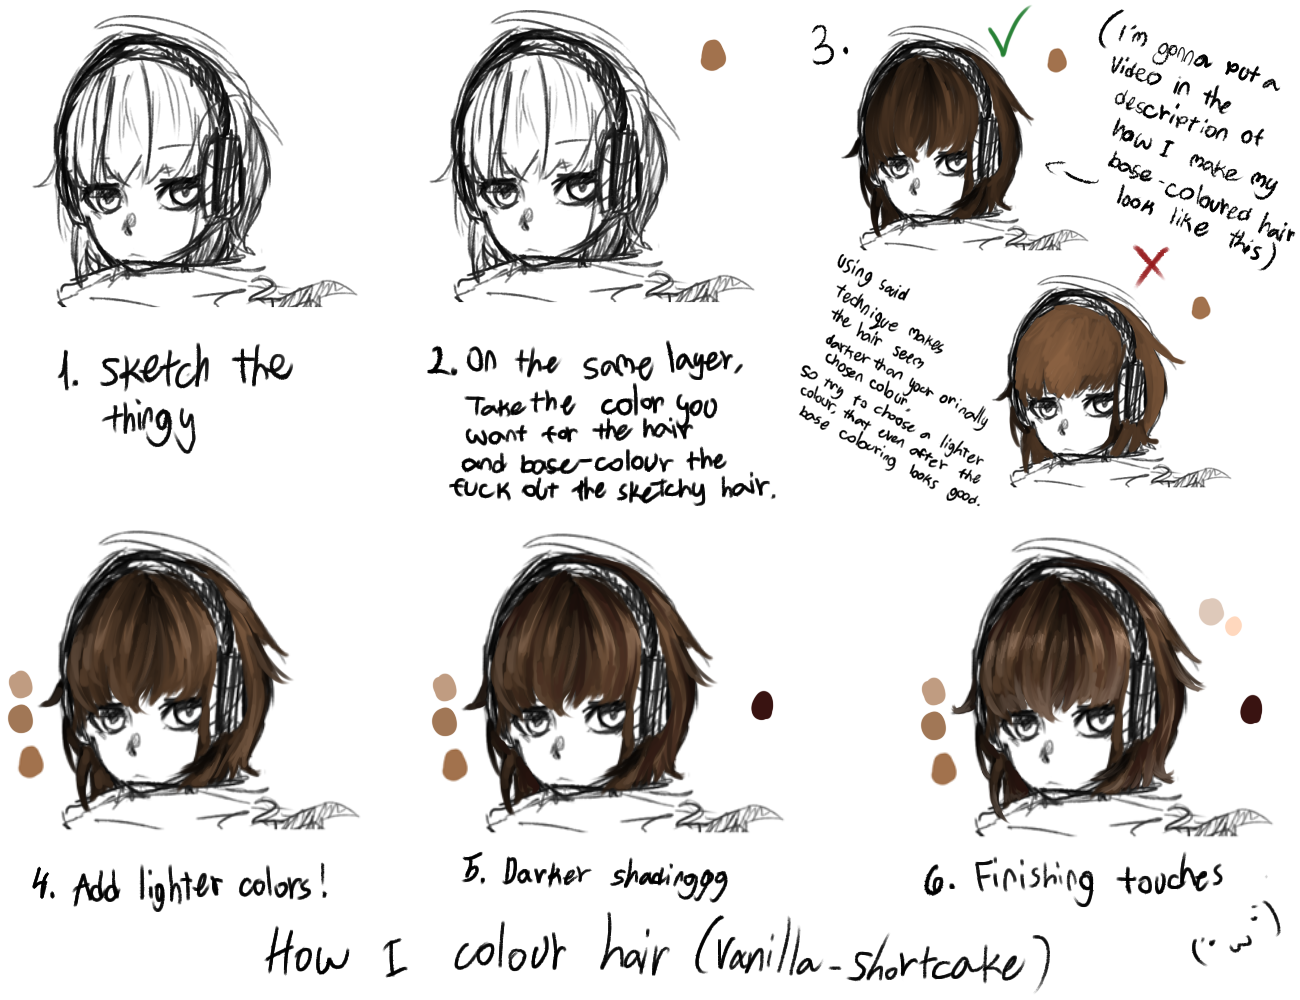 How I colour hair by Vanilla-Shortcake